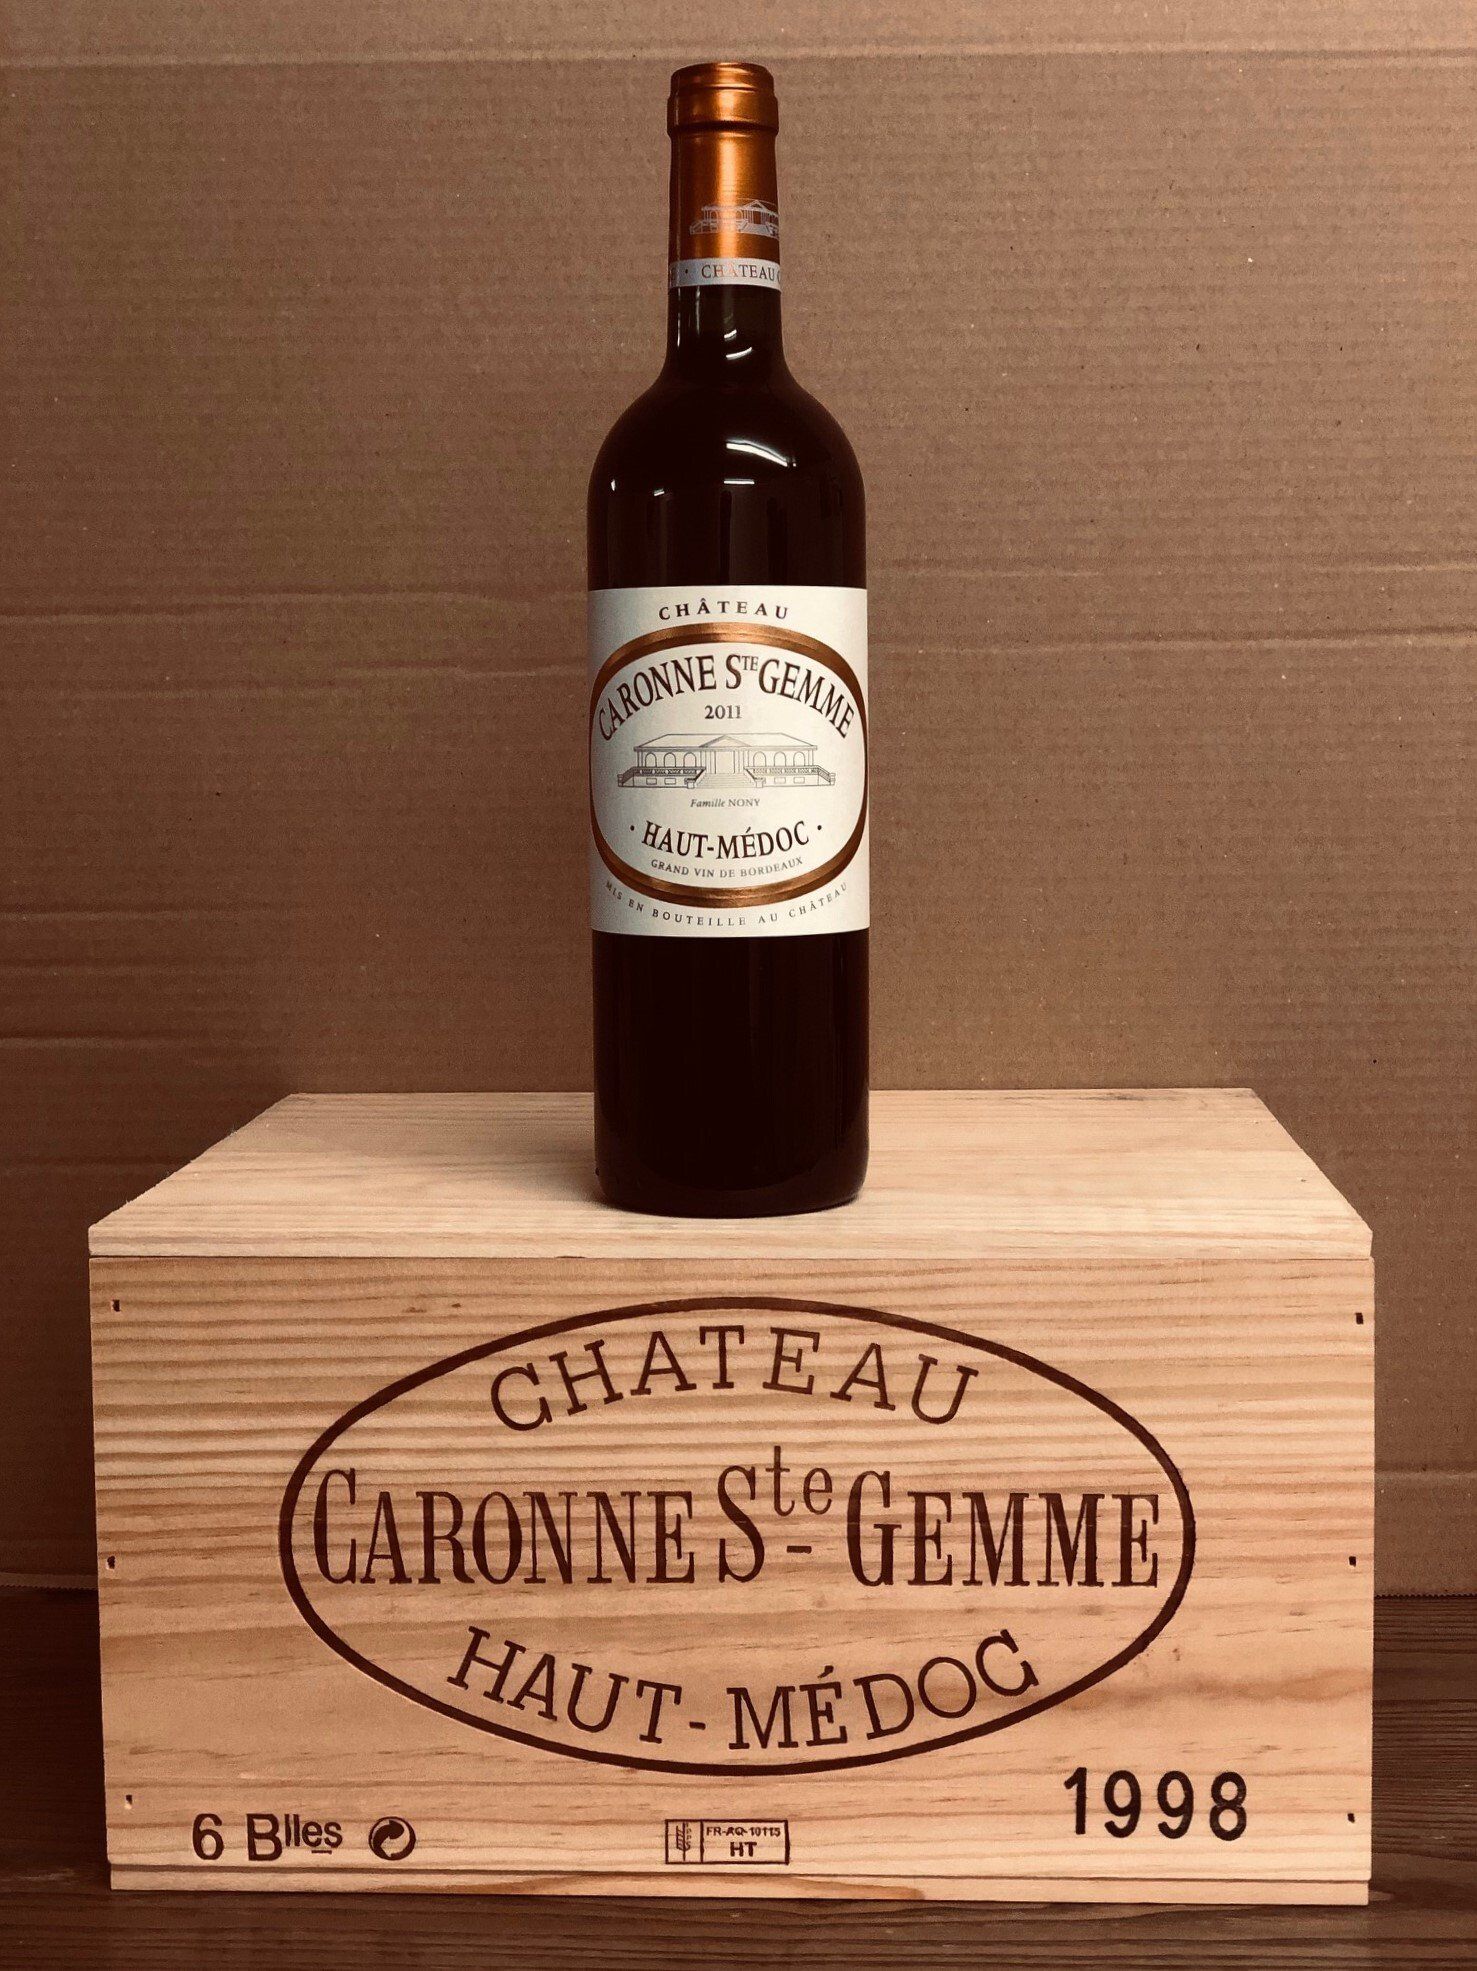 Caronne Ste Gemme - Haut Medoc - 1998 bottle & wooden case